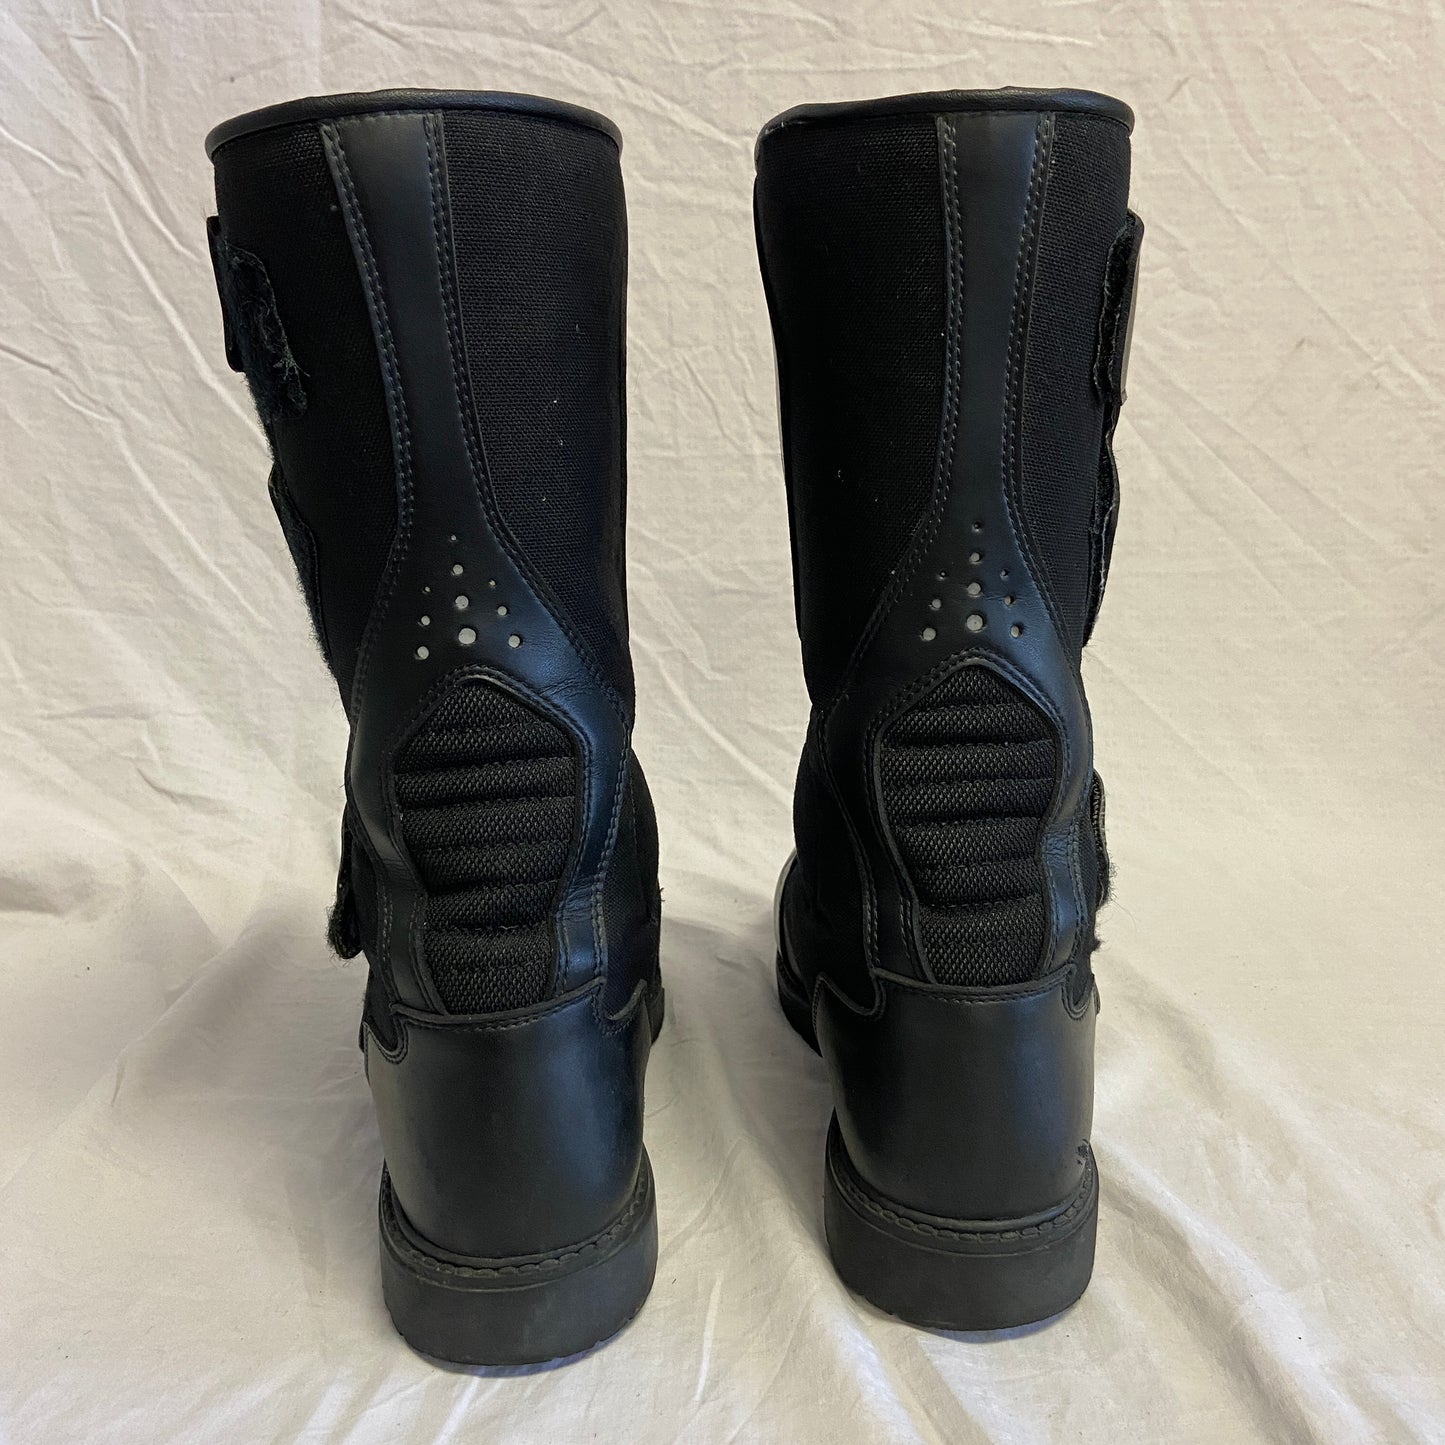 Sidi All Road Gore-Tex Boots Black 45 EU / 11 US (Used) - ExtremeSupply.com